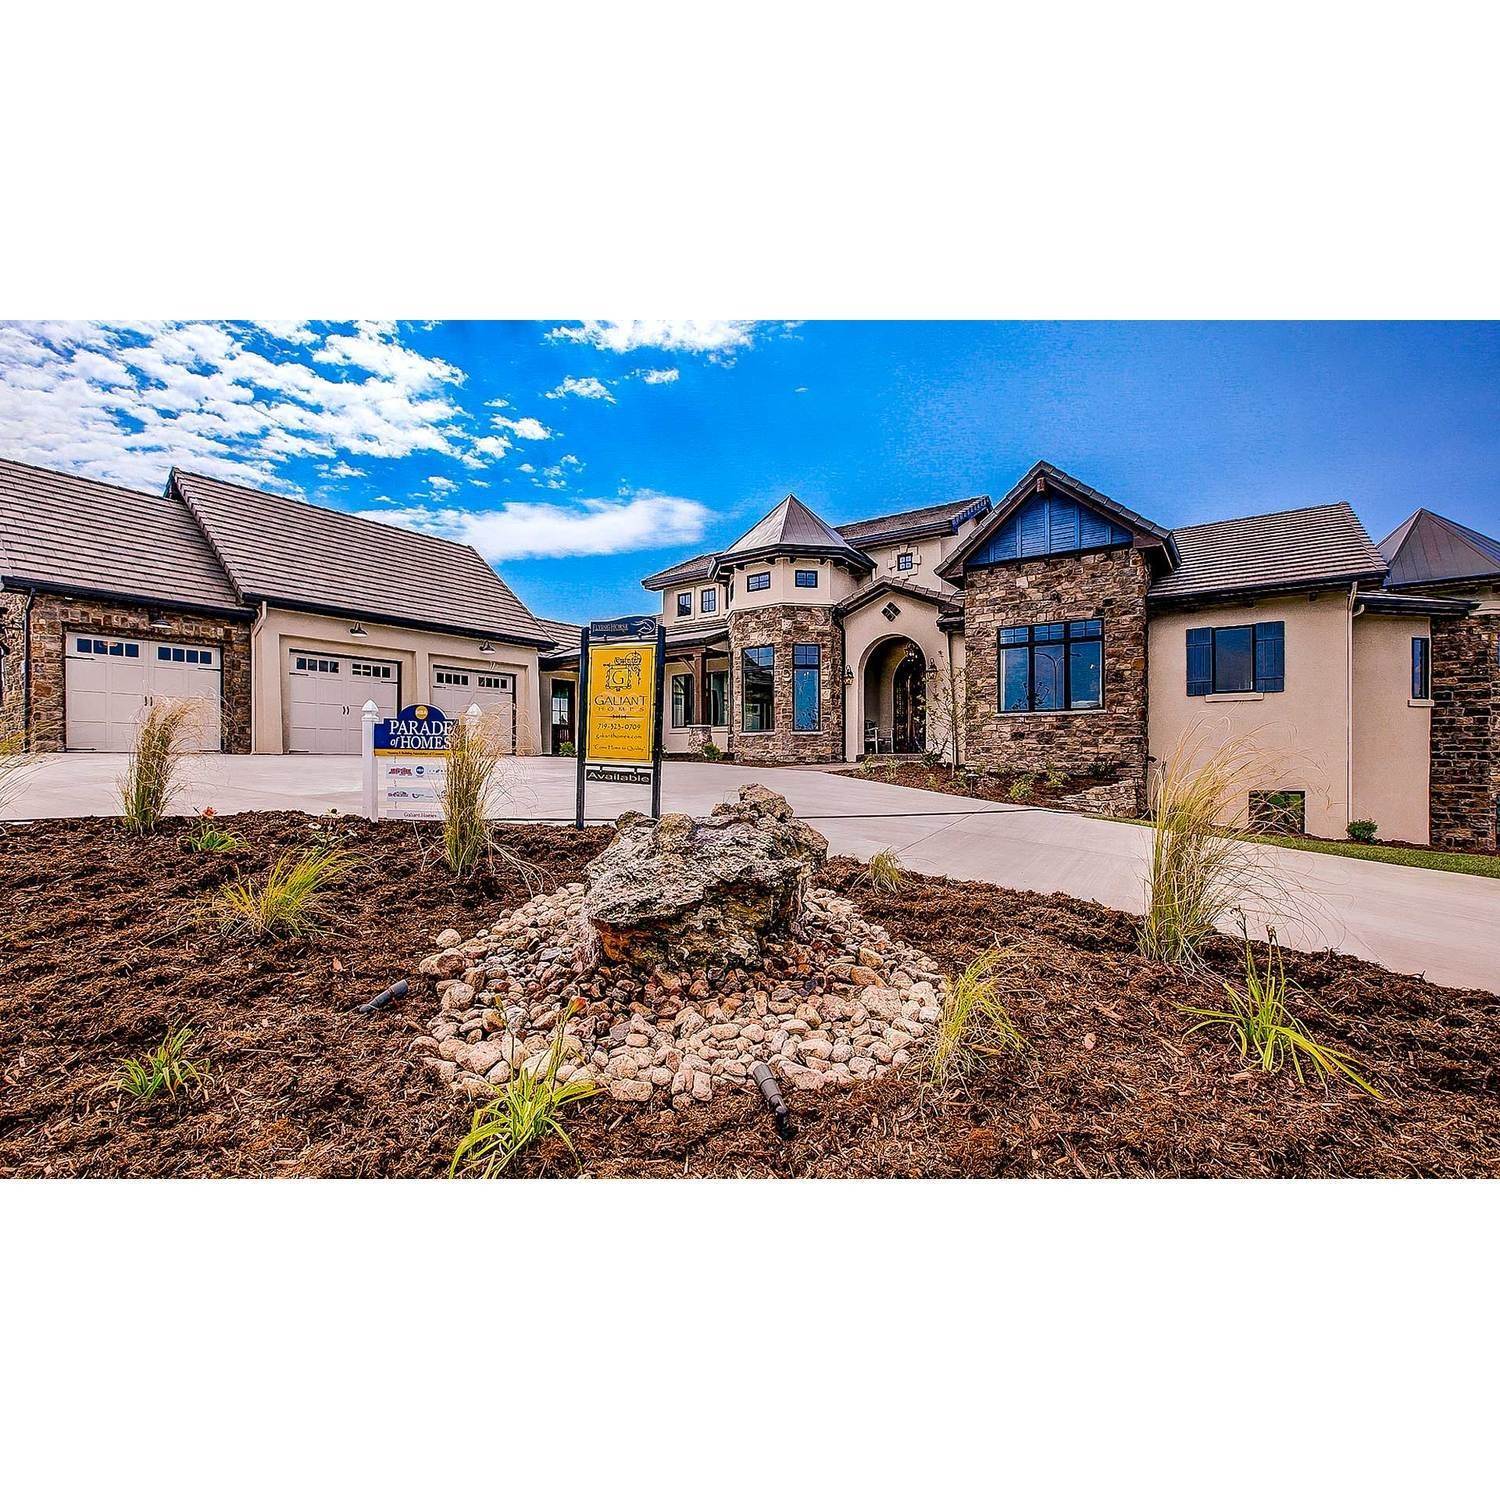 19. Galiant Homes byggnad vid 4783 Farmingdale Dr, Colorado Springs, CO 80918